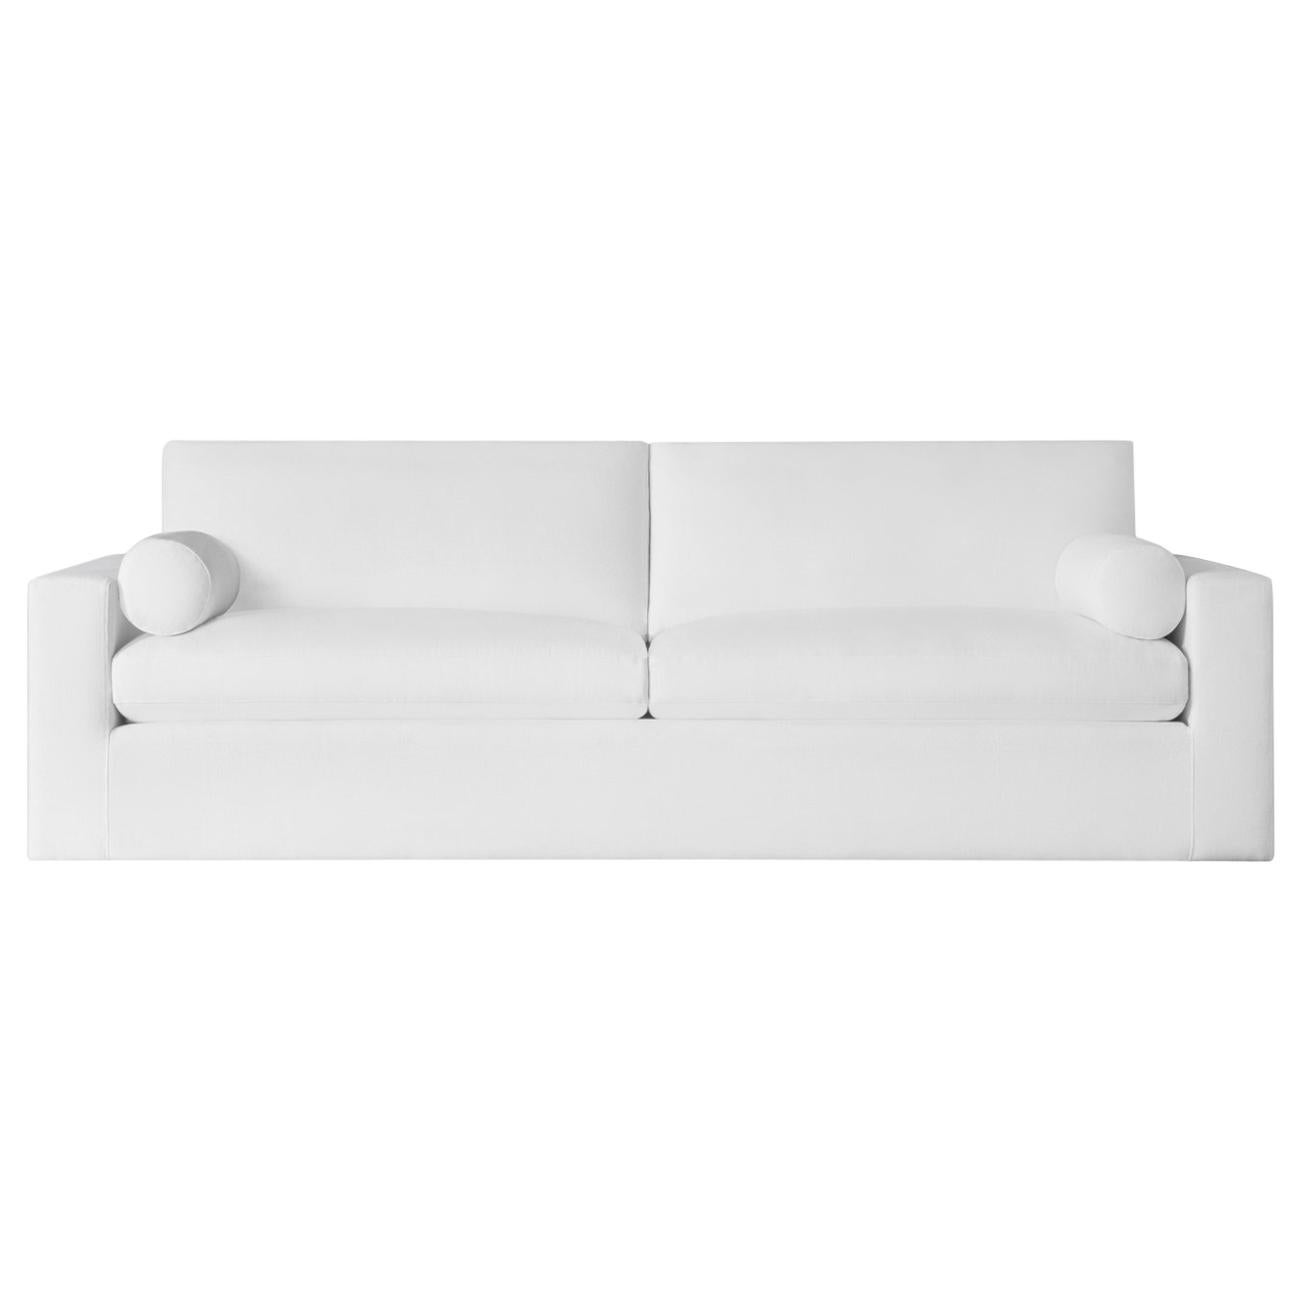 Ben Soleimani Harper Double-cushioned Sofa 8' – Heavy Linen For Sale